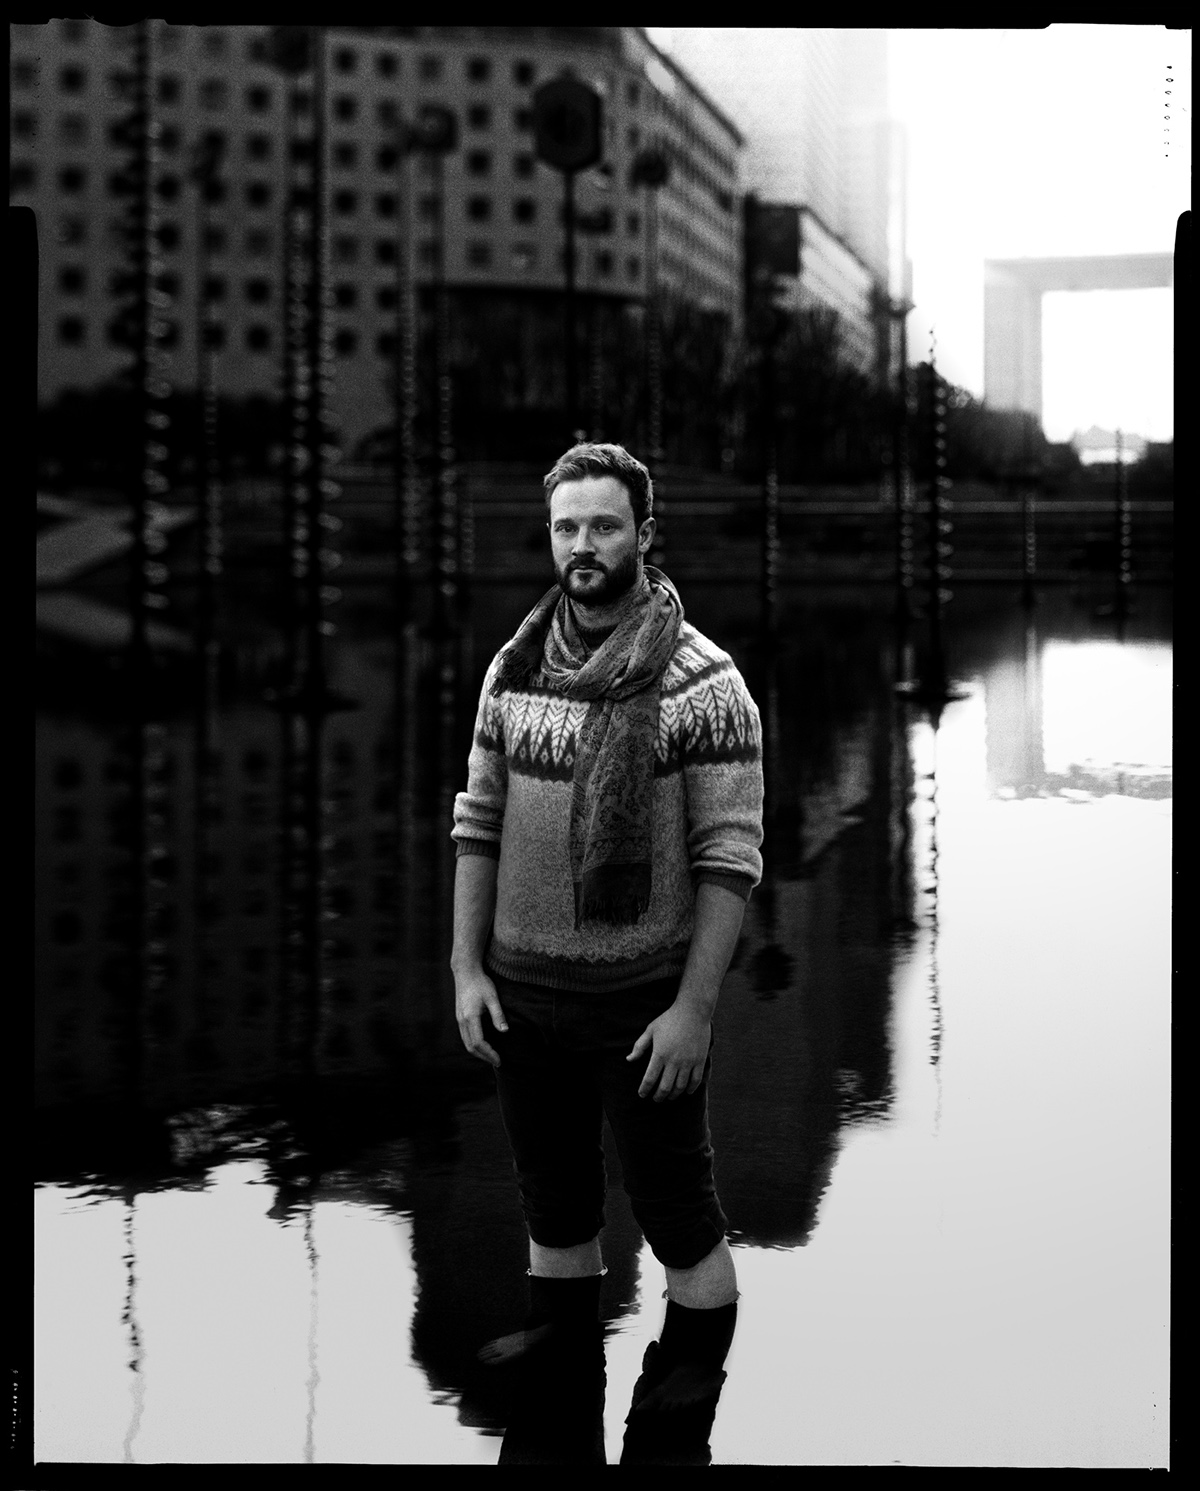 sinar portrait large format 4x5 streetphotography analog